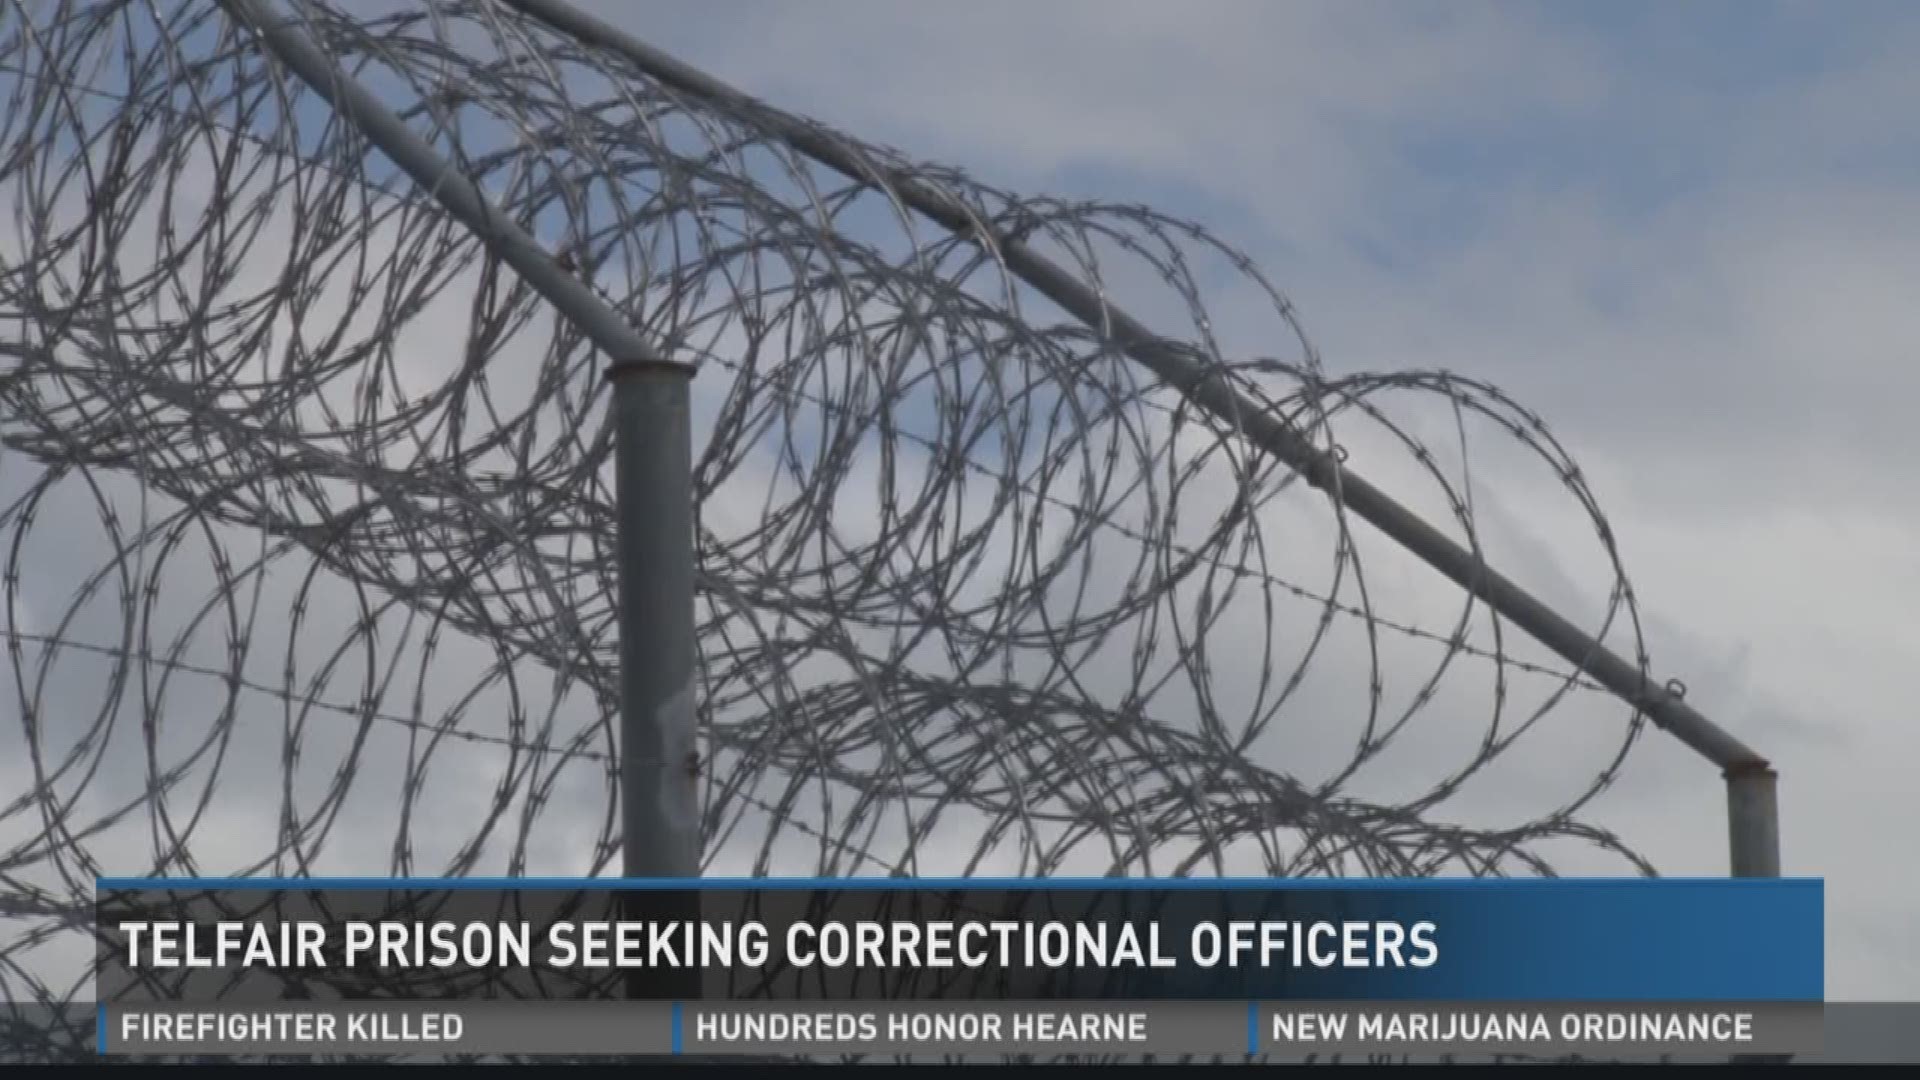 Telfair prison seeking correctional officers